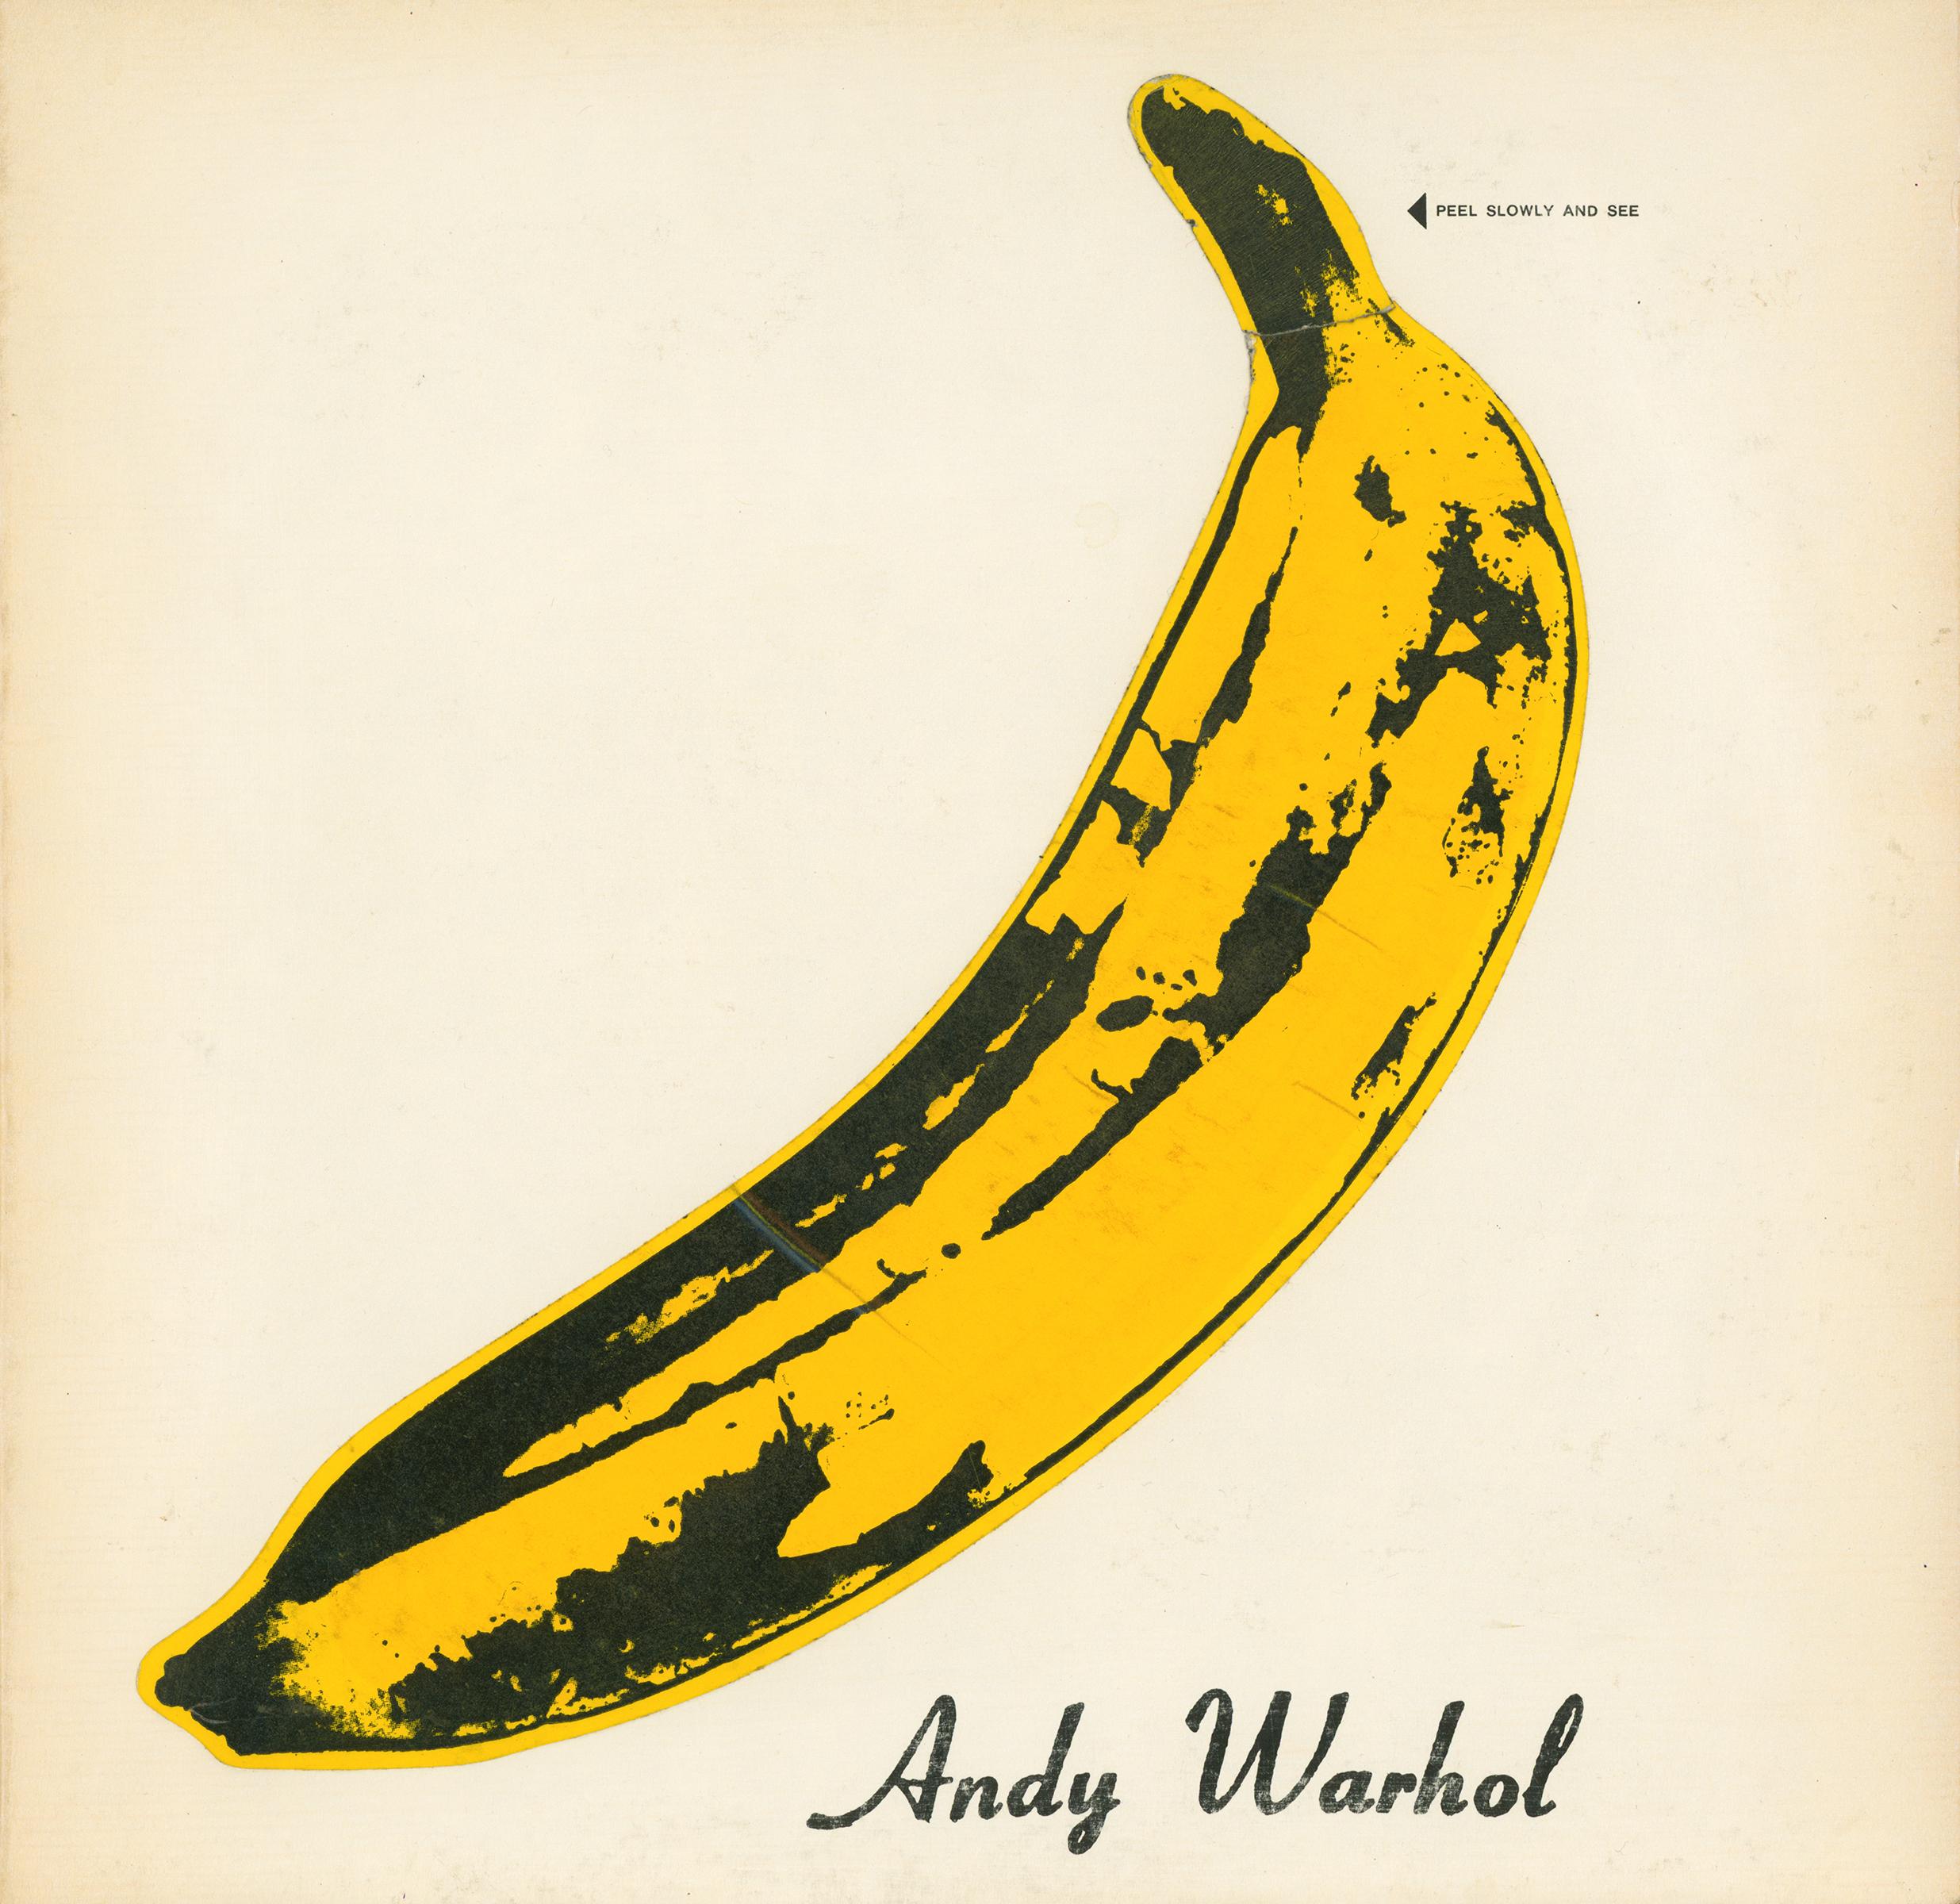 banana record player